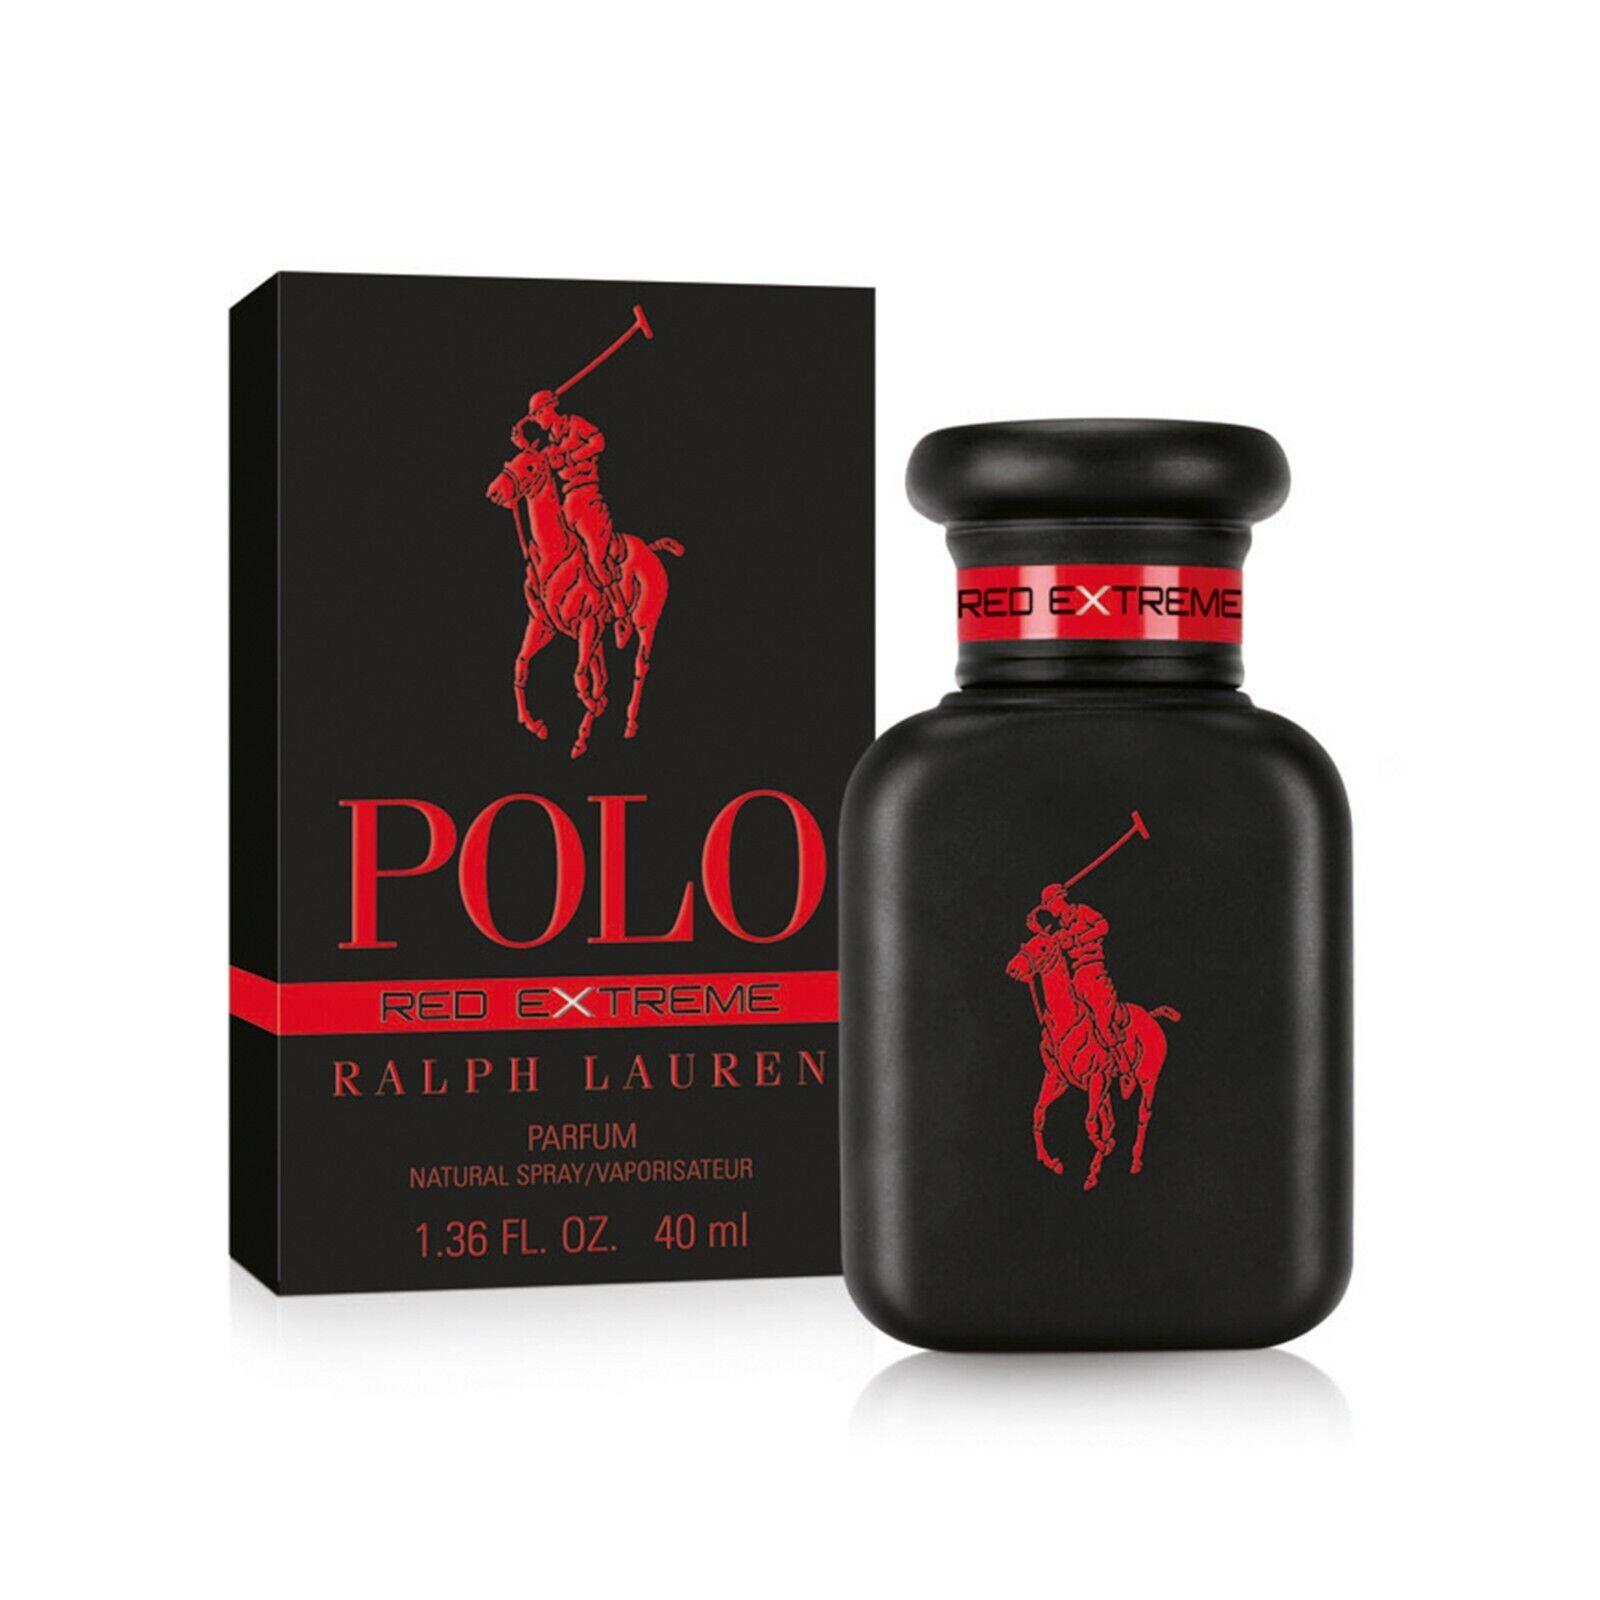 Polo Red Extreme Cologne Ralph Lauren 1.36 oz 40 ml Perfume Natural Spray Men